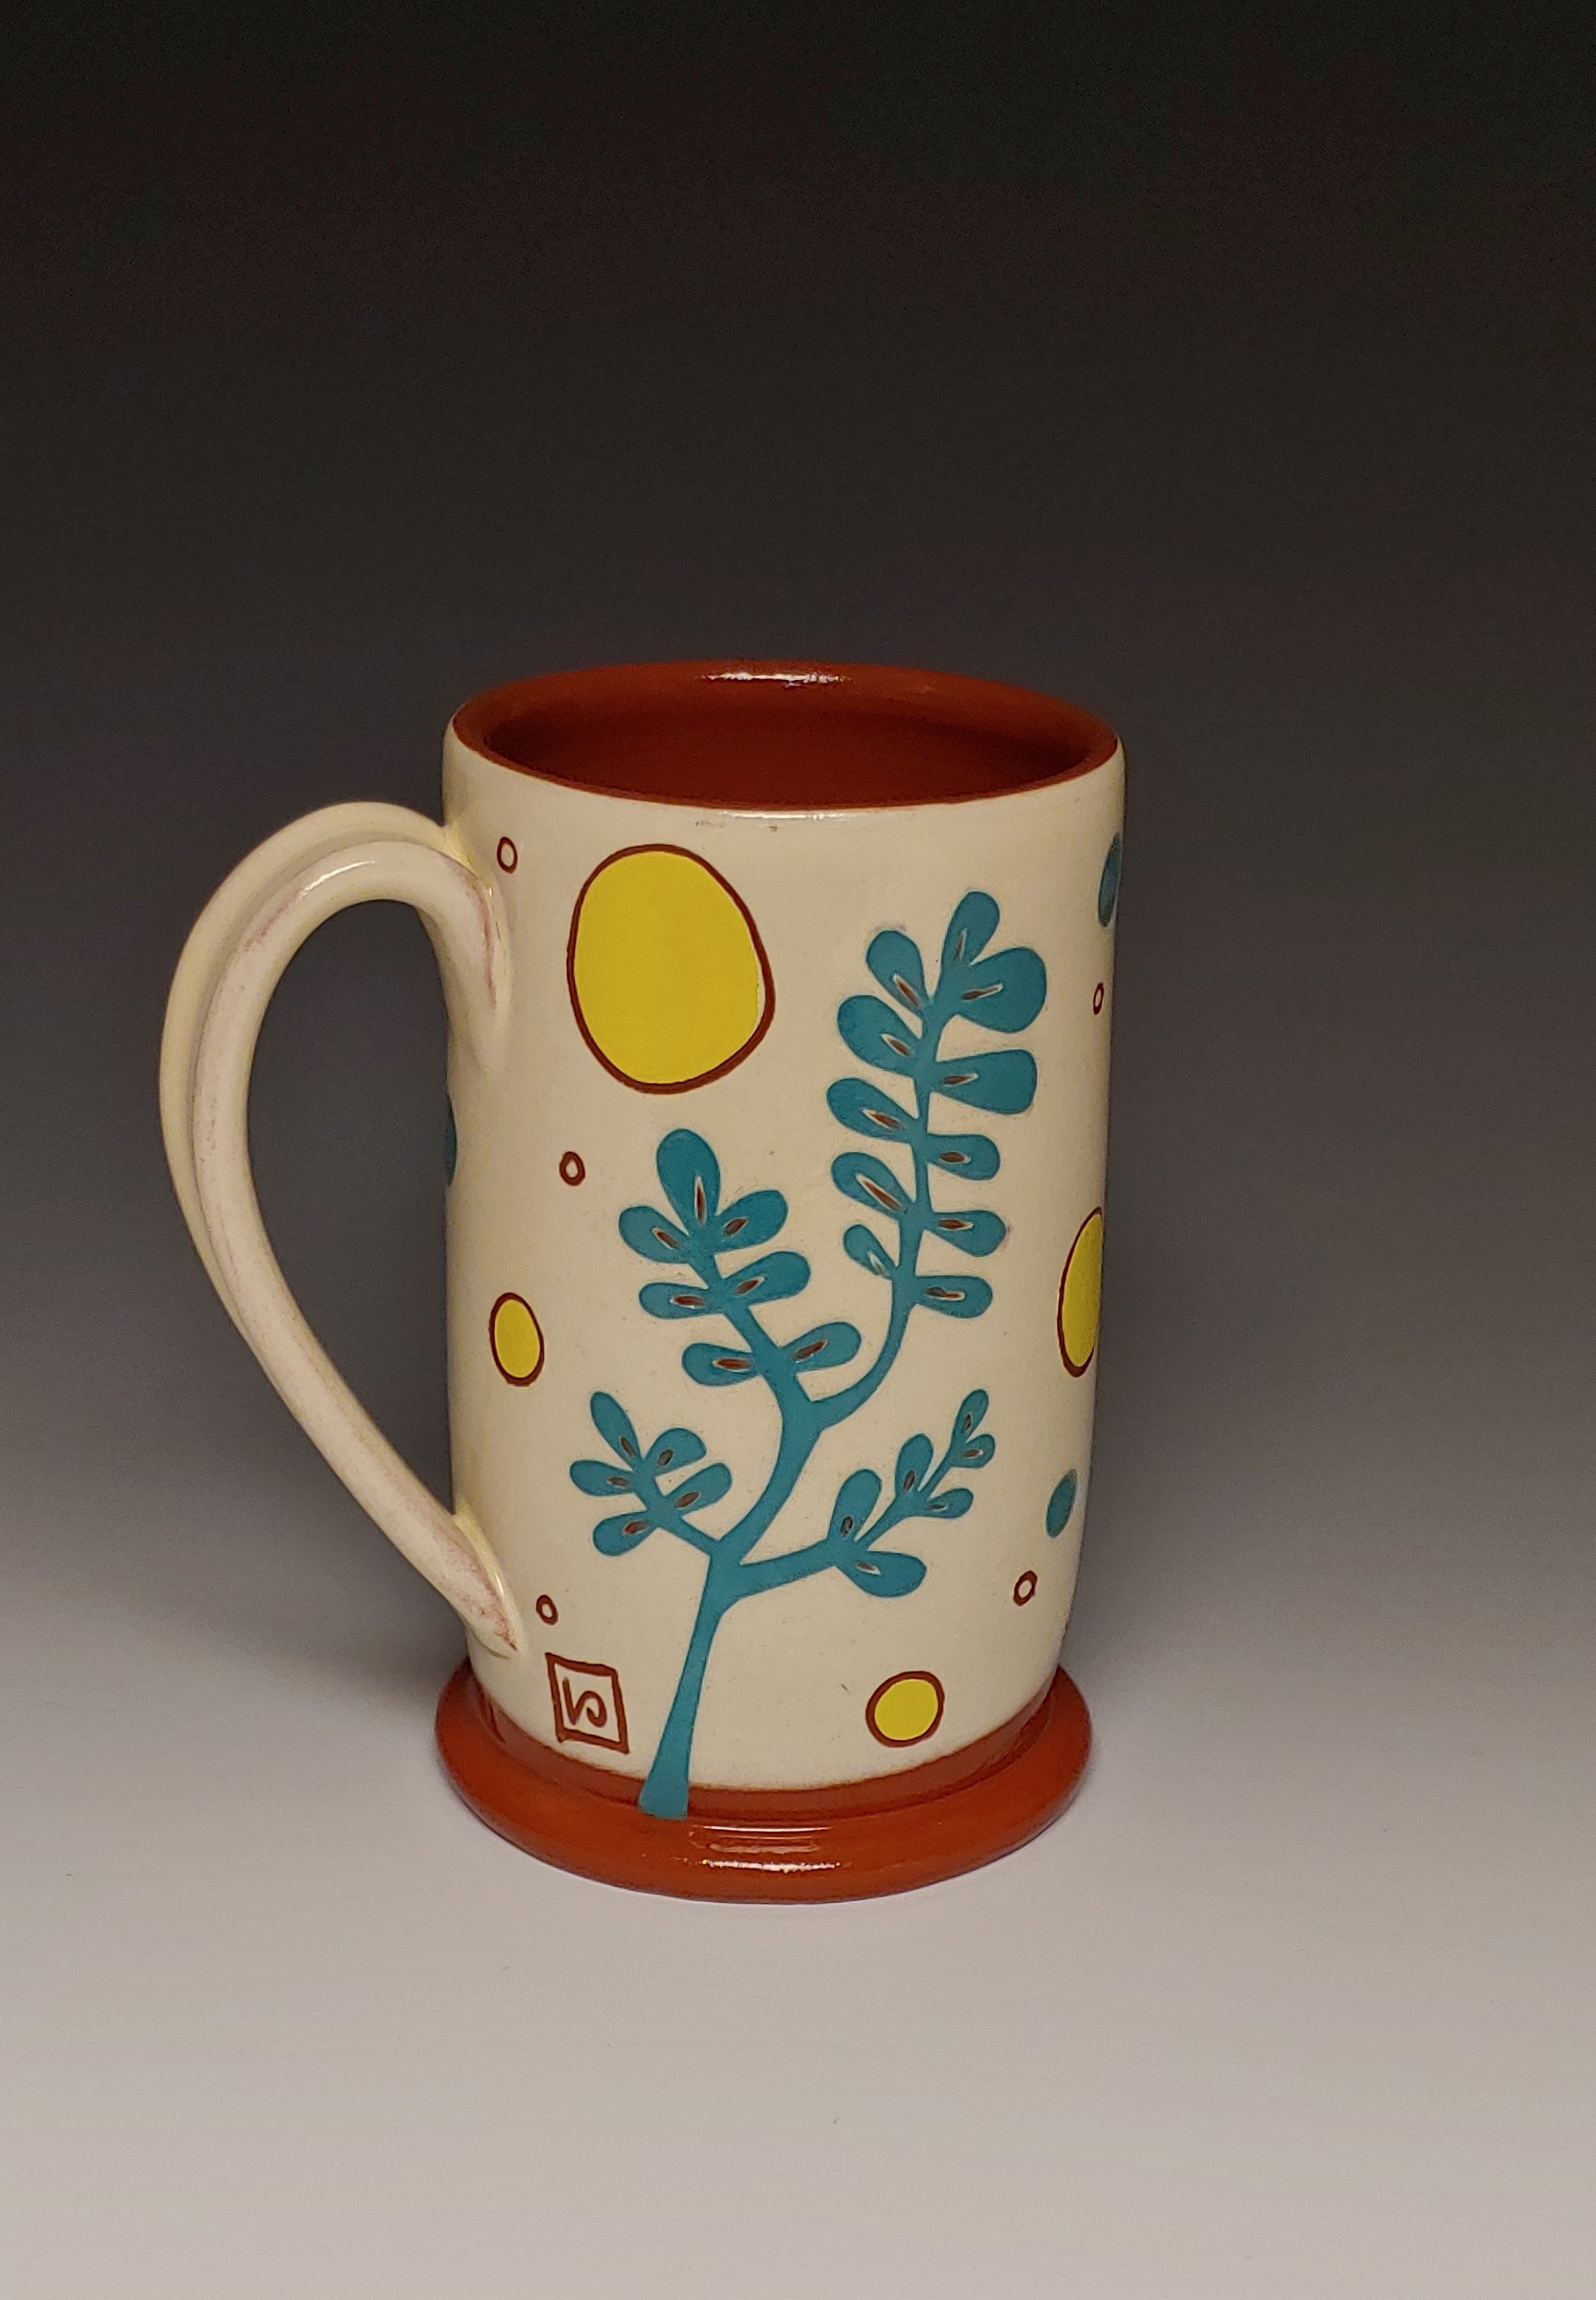 Cheerful Leafy Mug with Yellow Spots